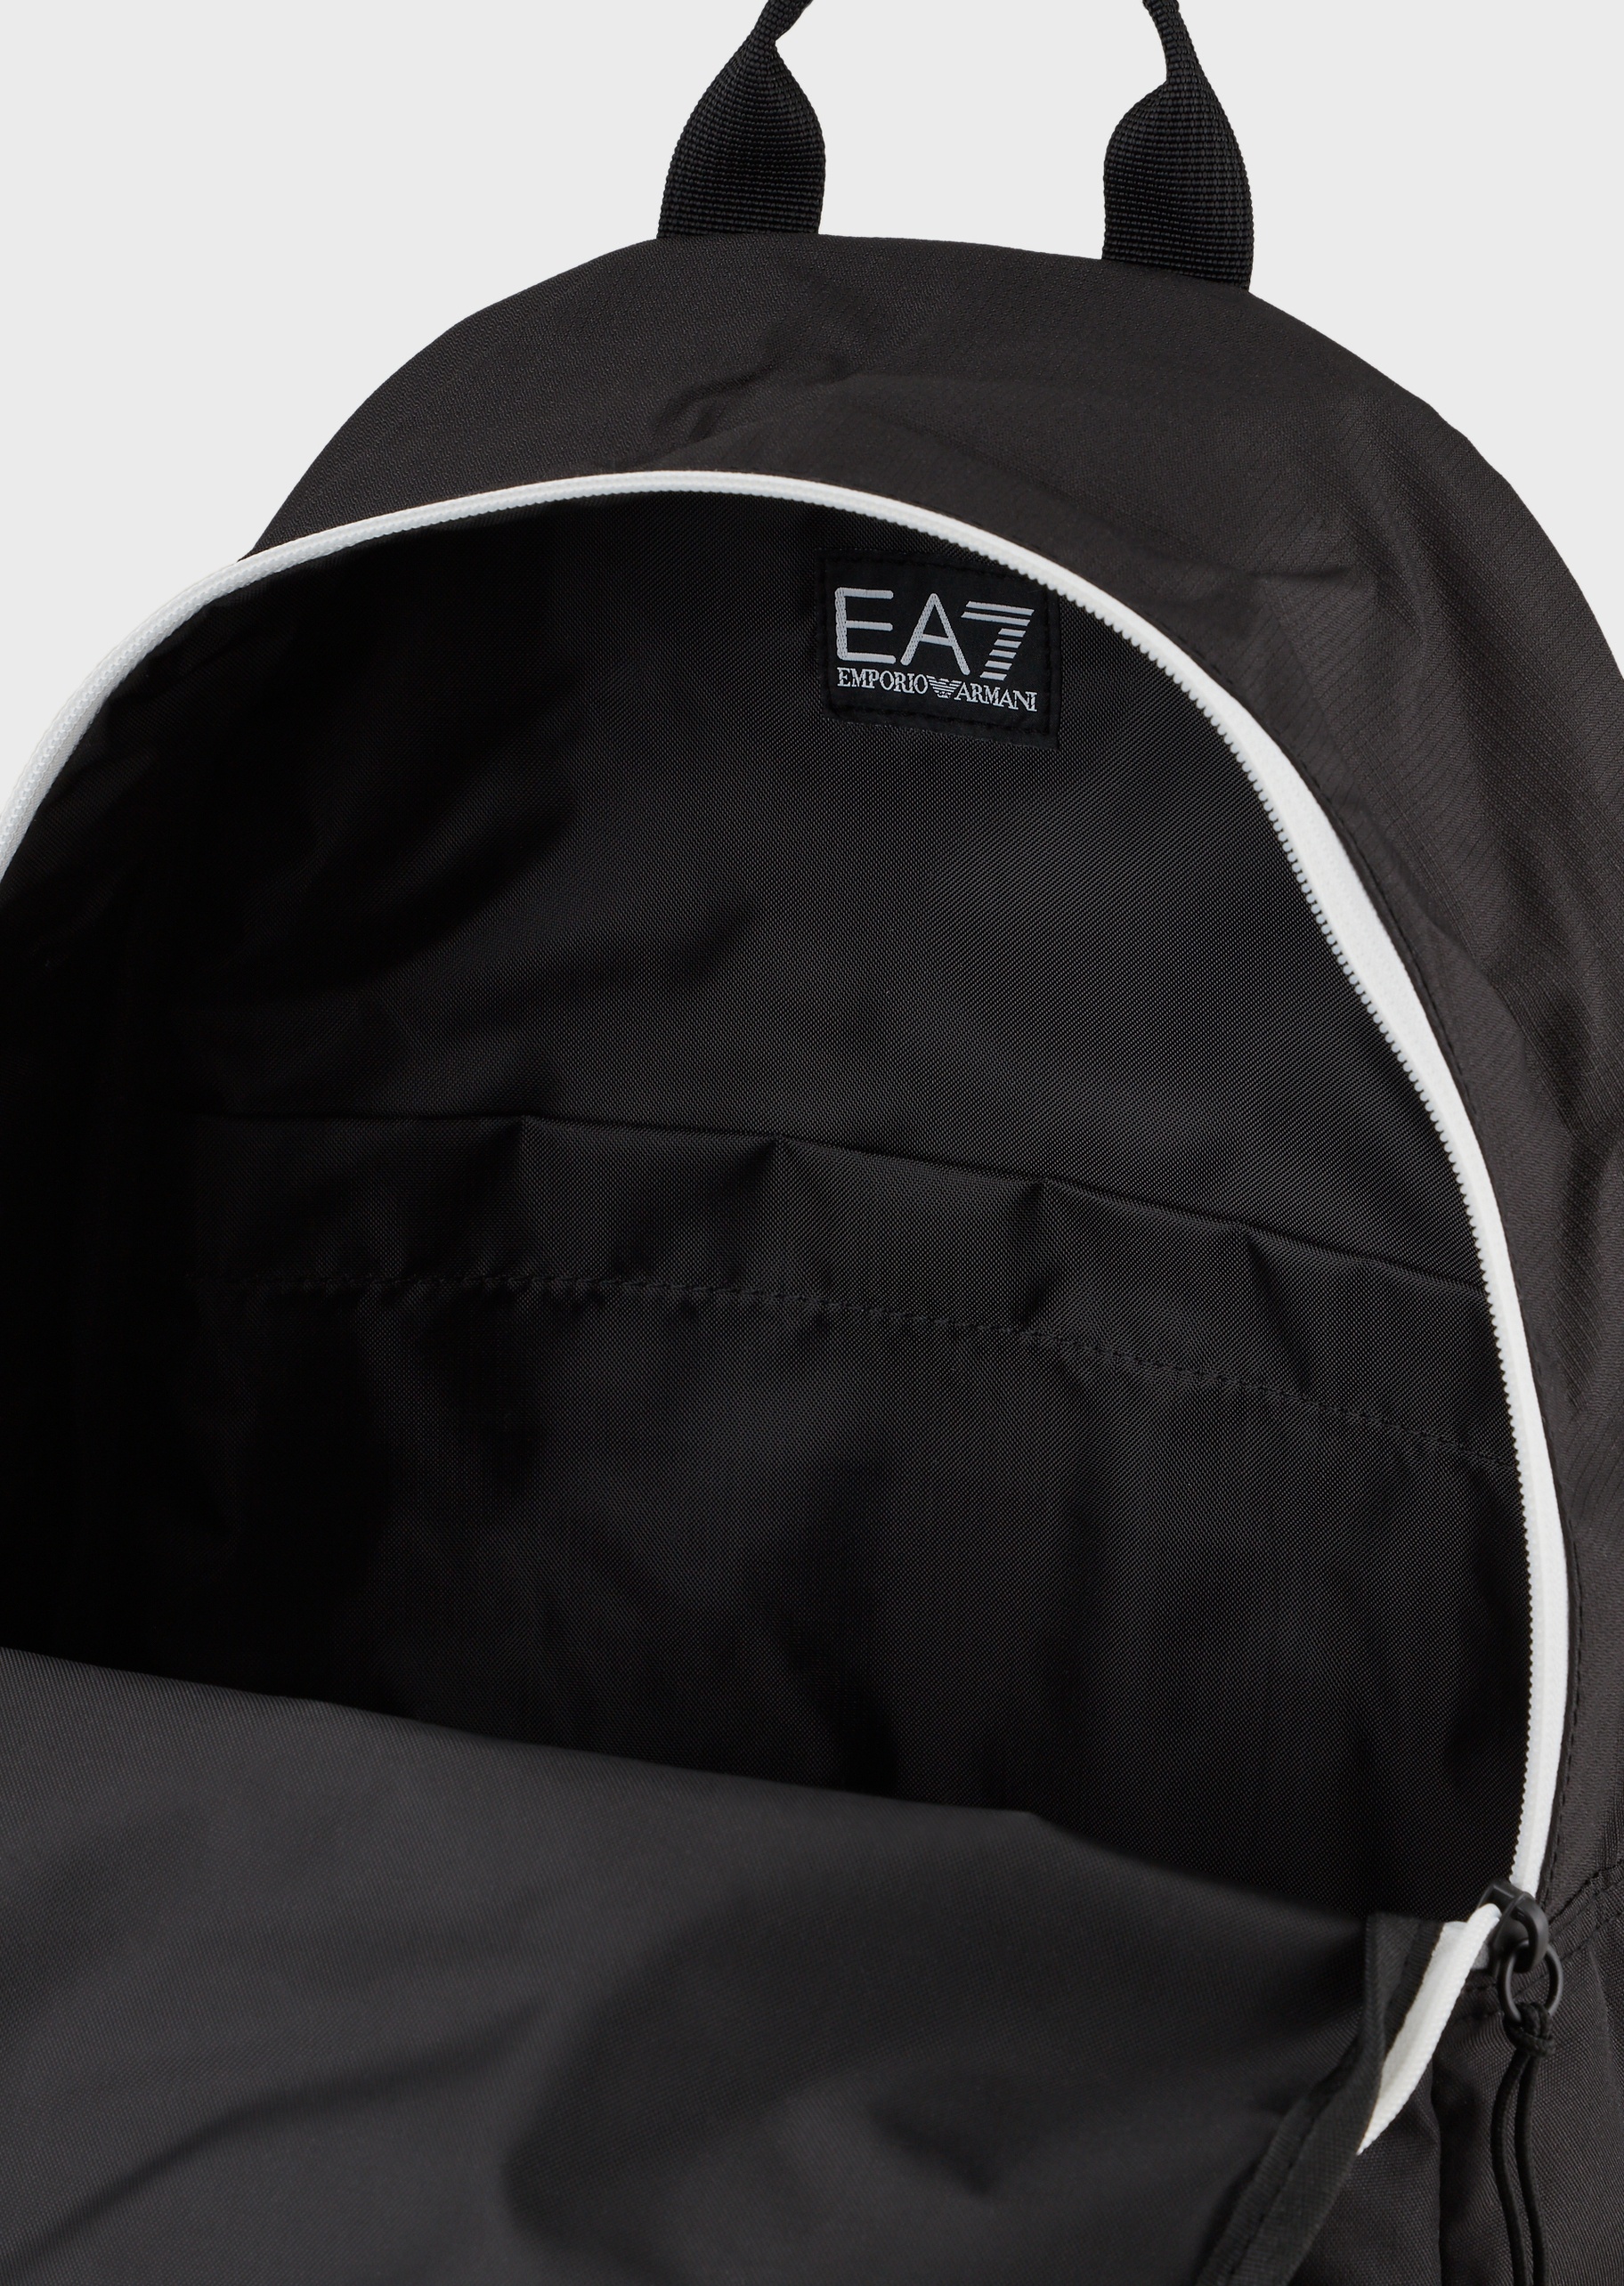 EA7 印花LOGO双肩包